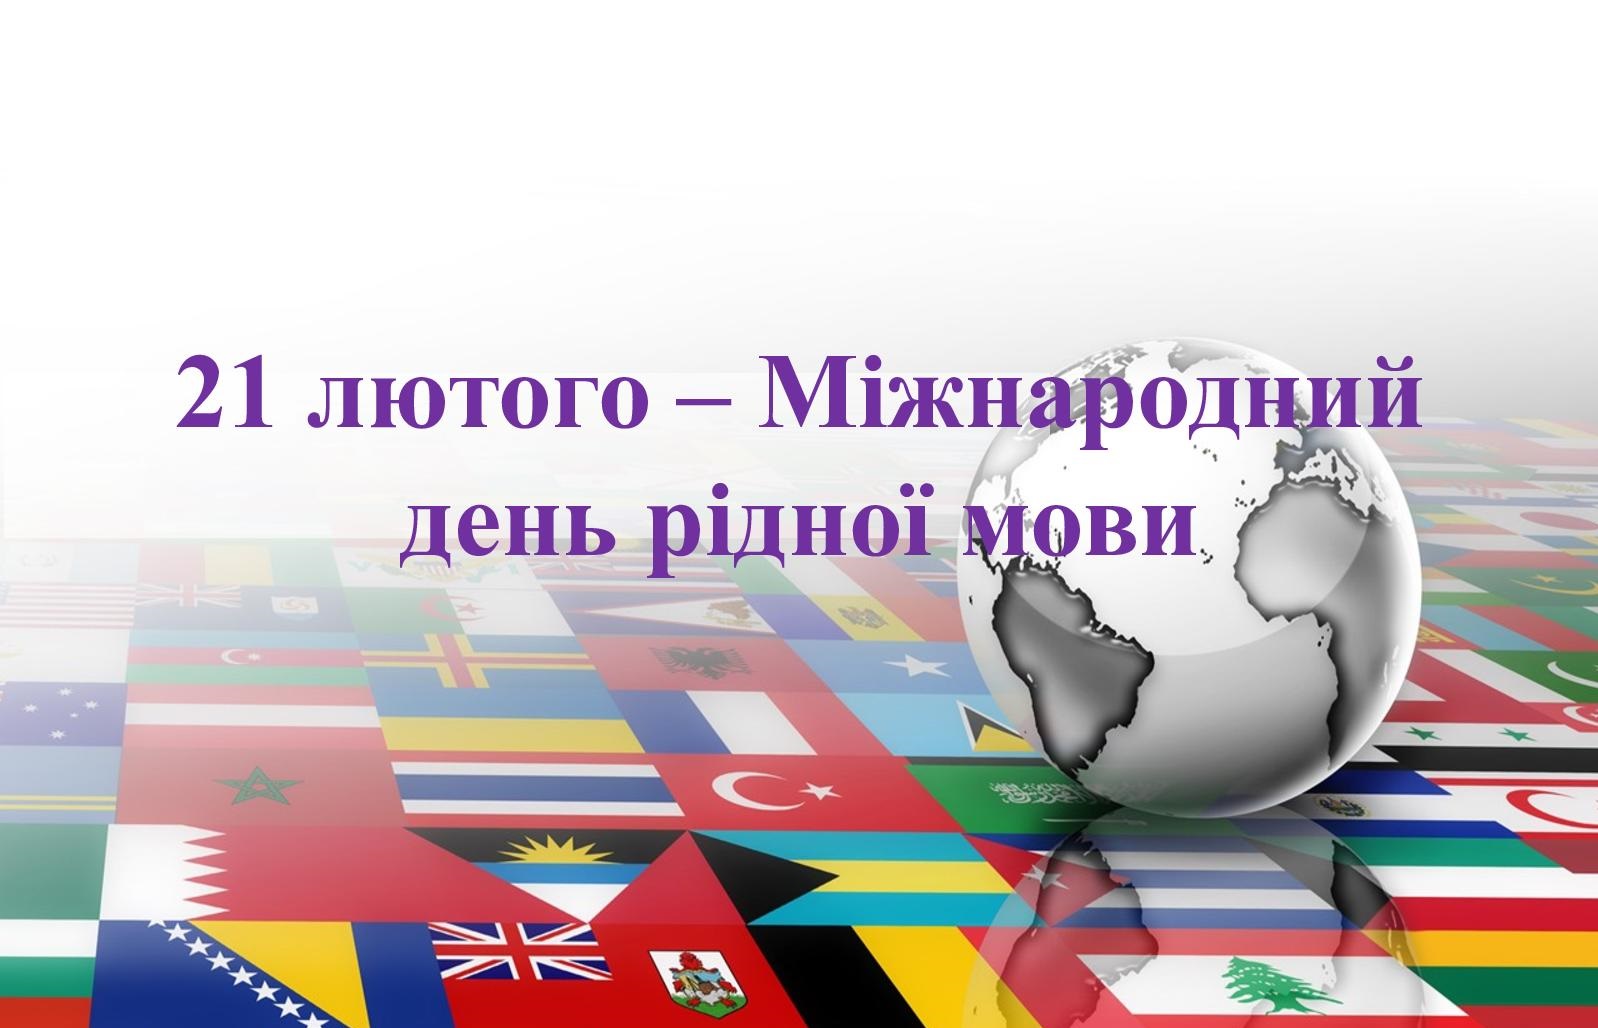 February 21 – International Mother Language Day